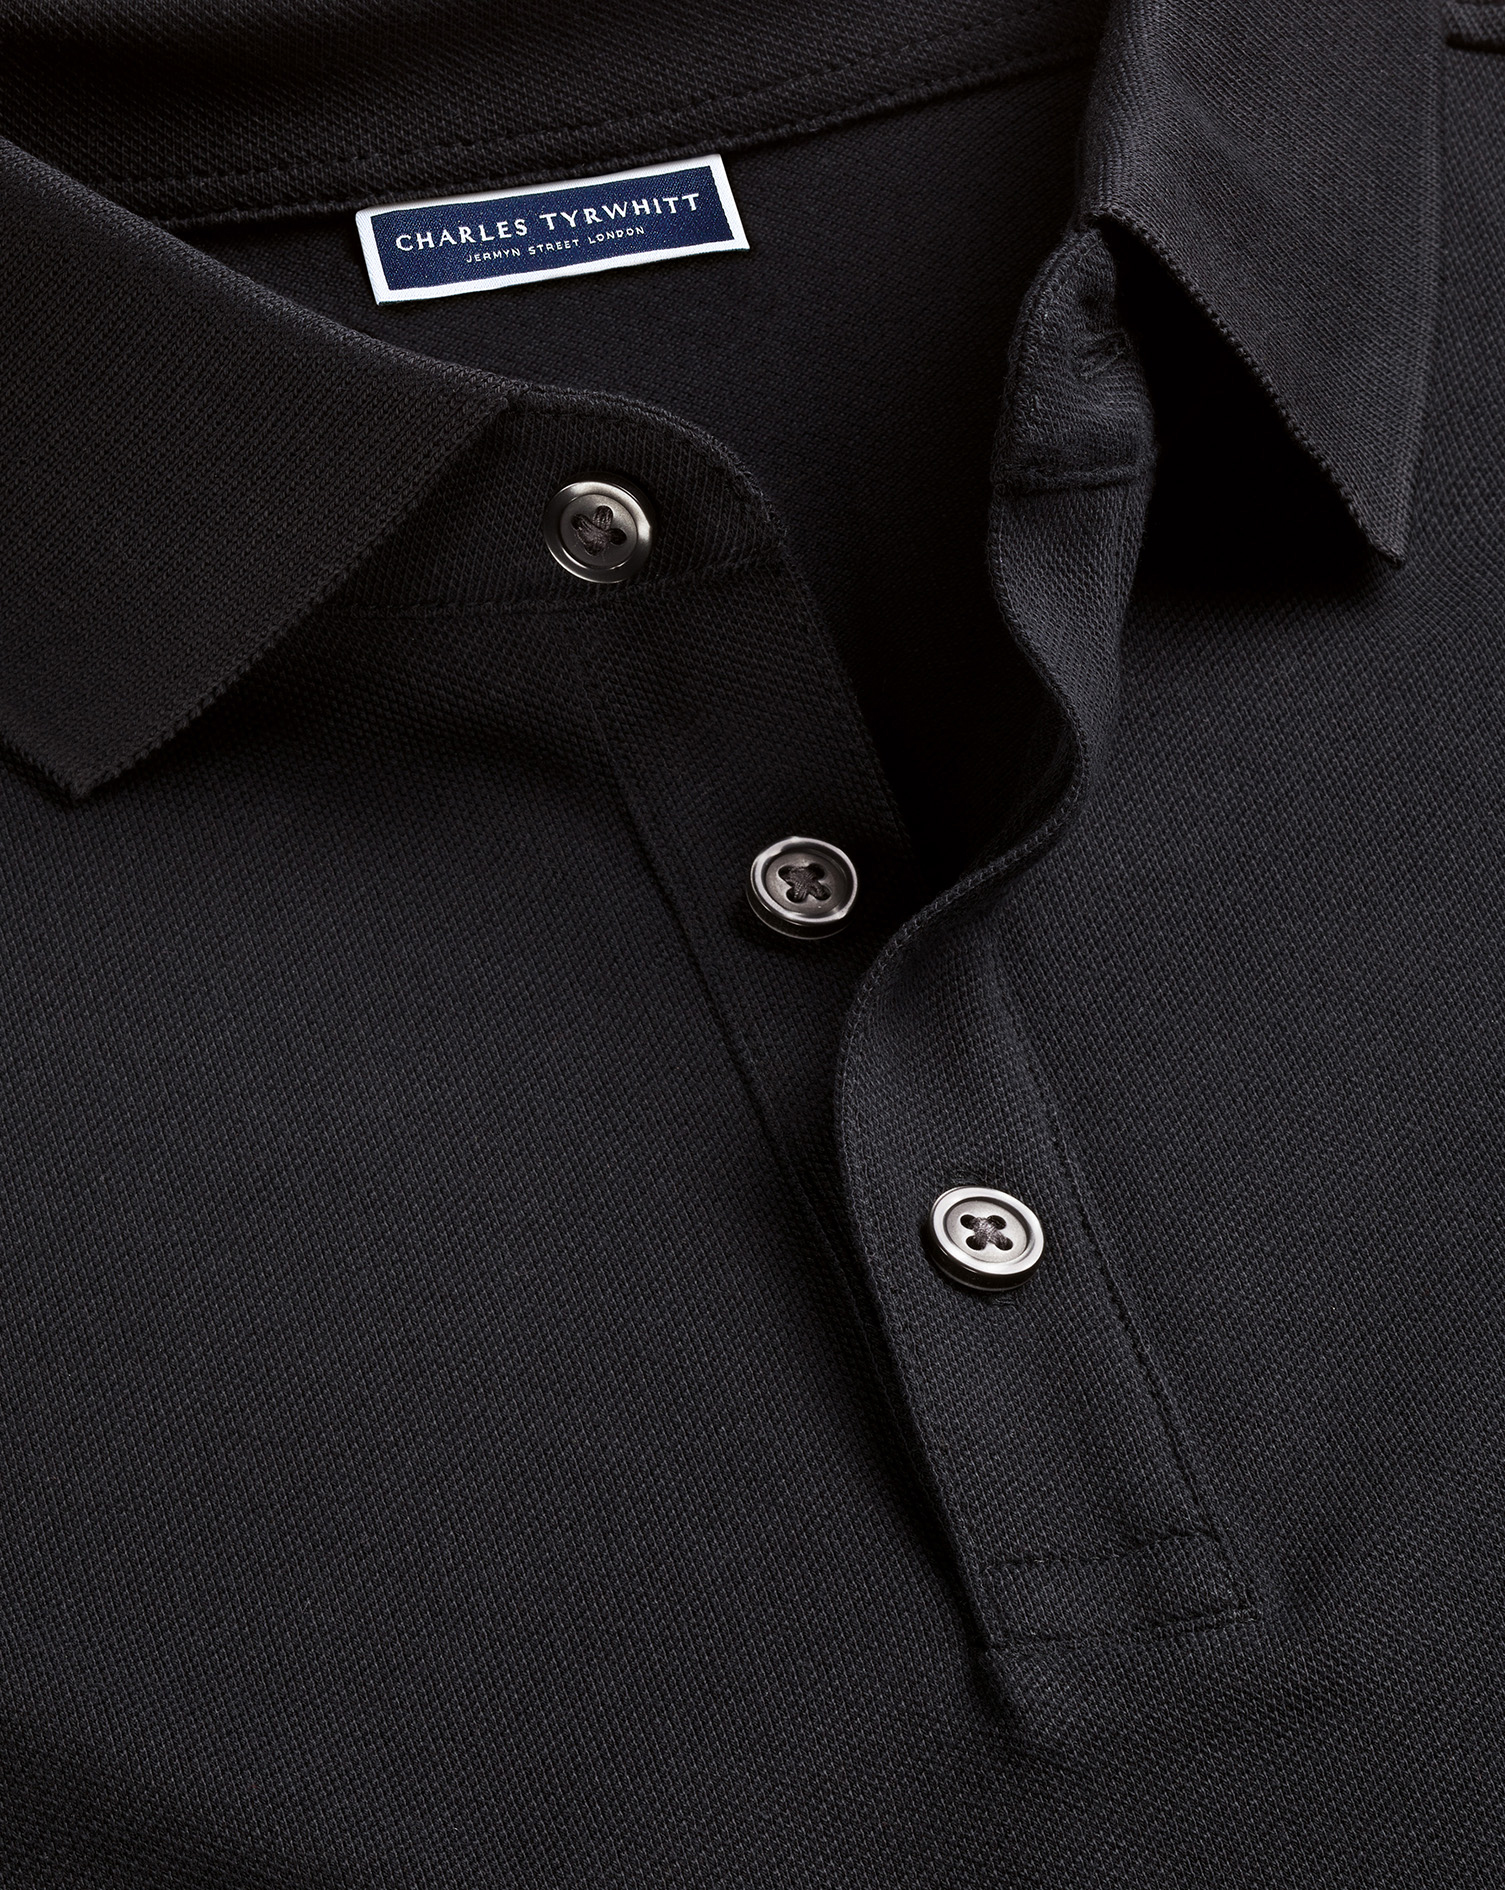 Men's Charles Tyrwhitt Pique Polo Shirt - Black Size Medium Cotton
